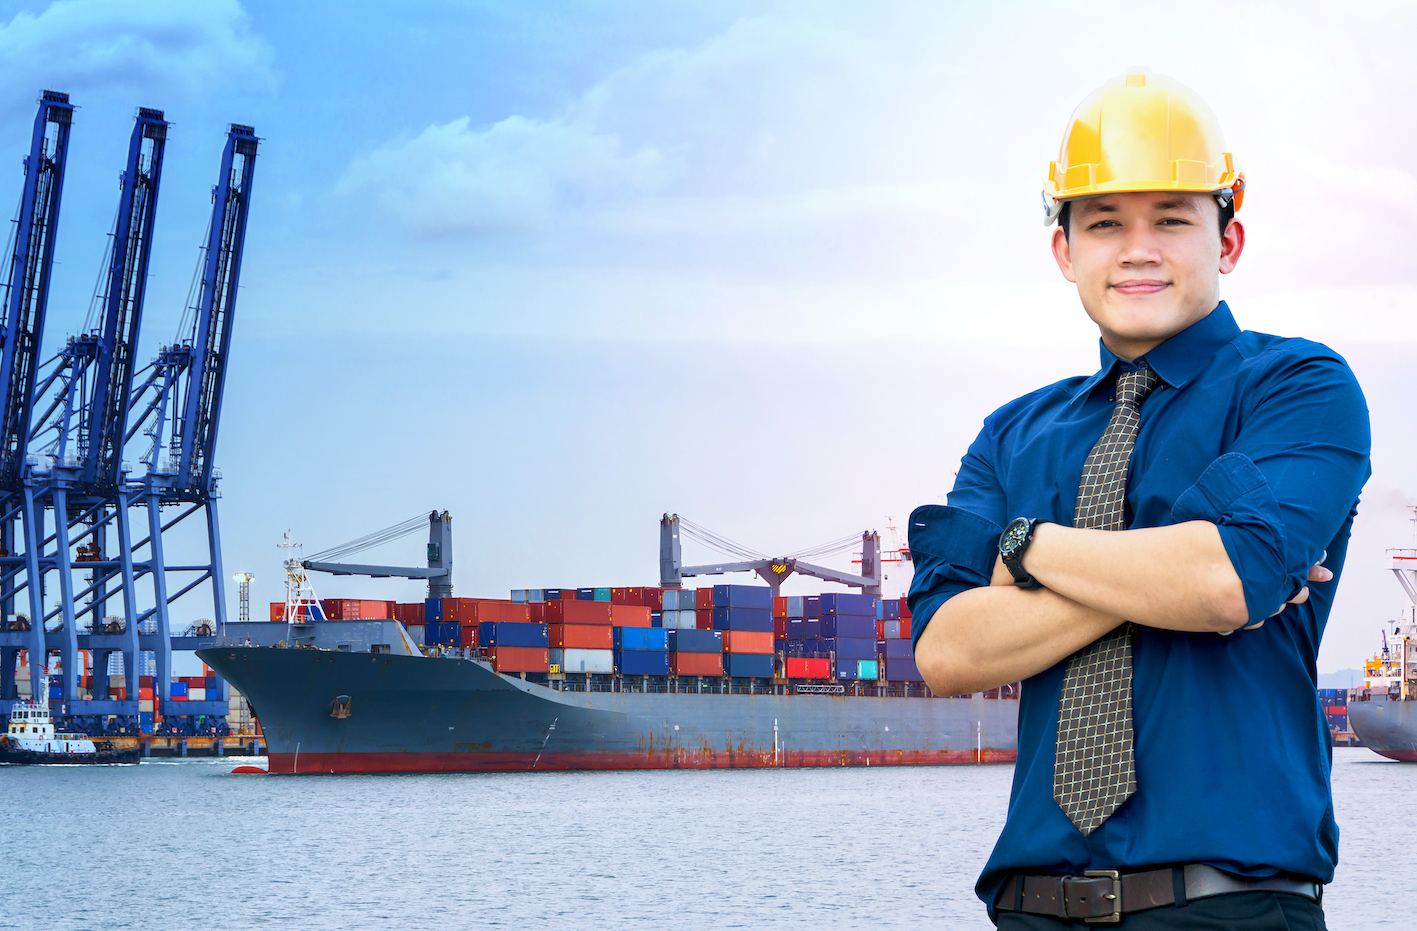 Jobs in international shipping